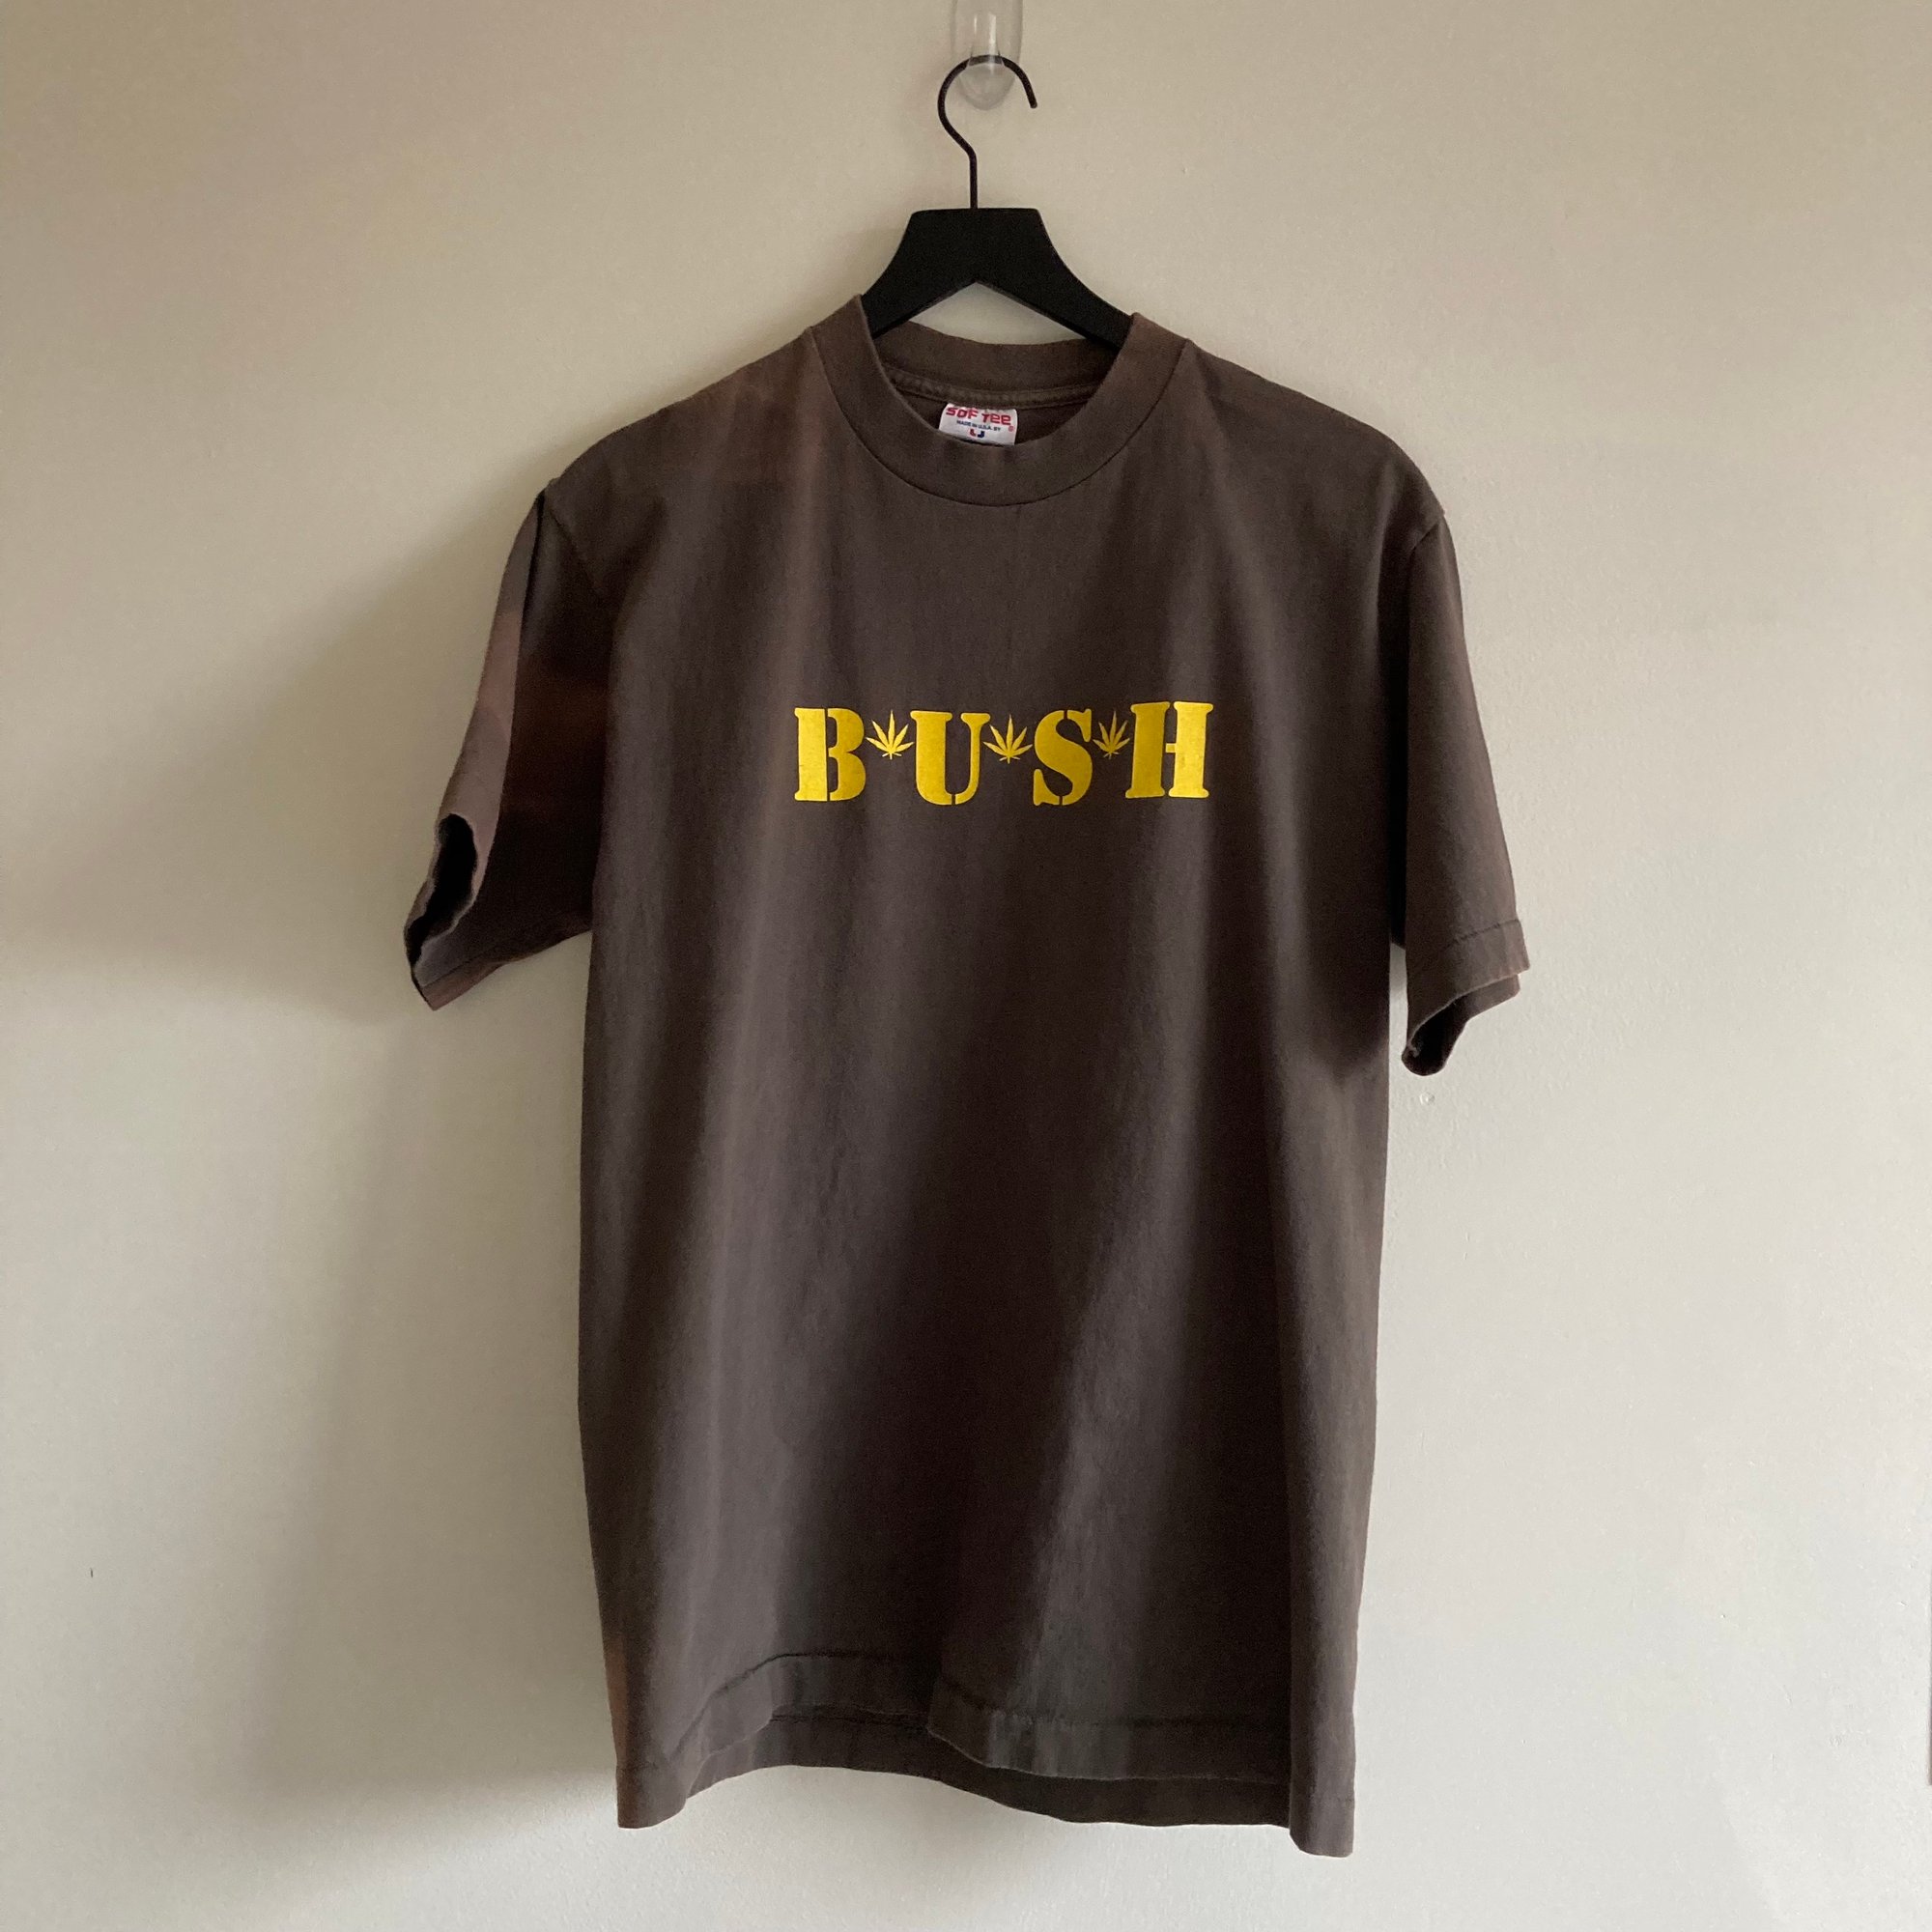 Bush Fan Club T-Shirt | Intramural